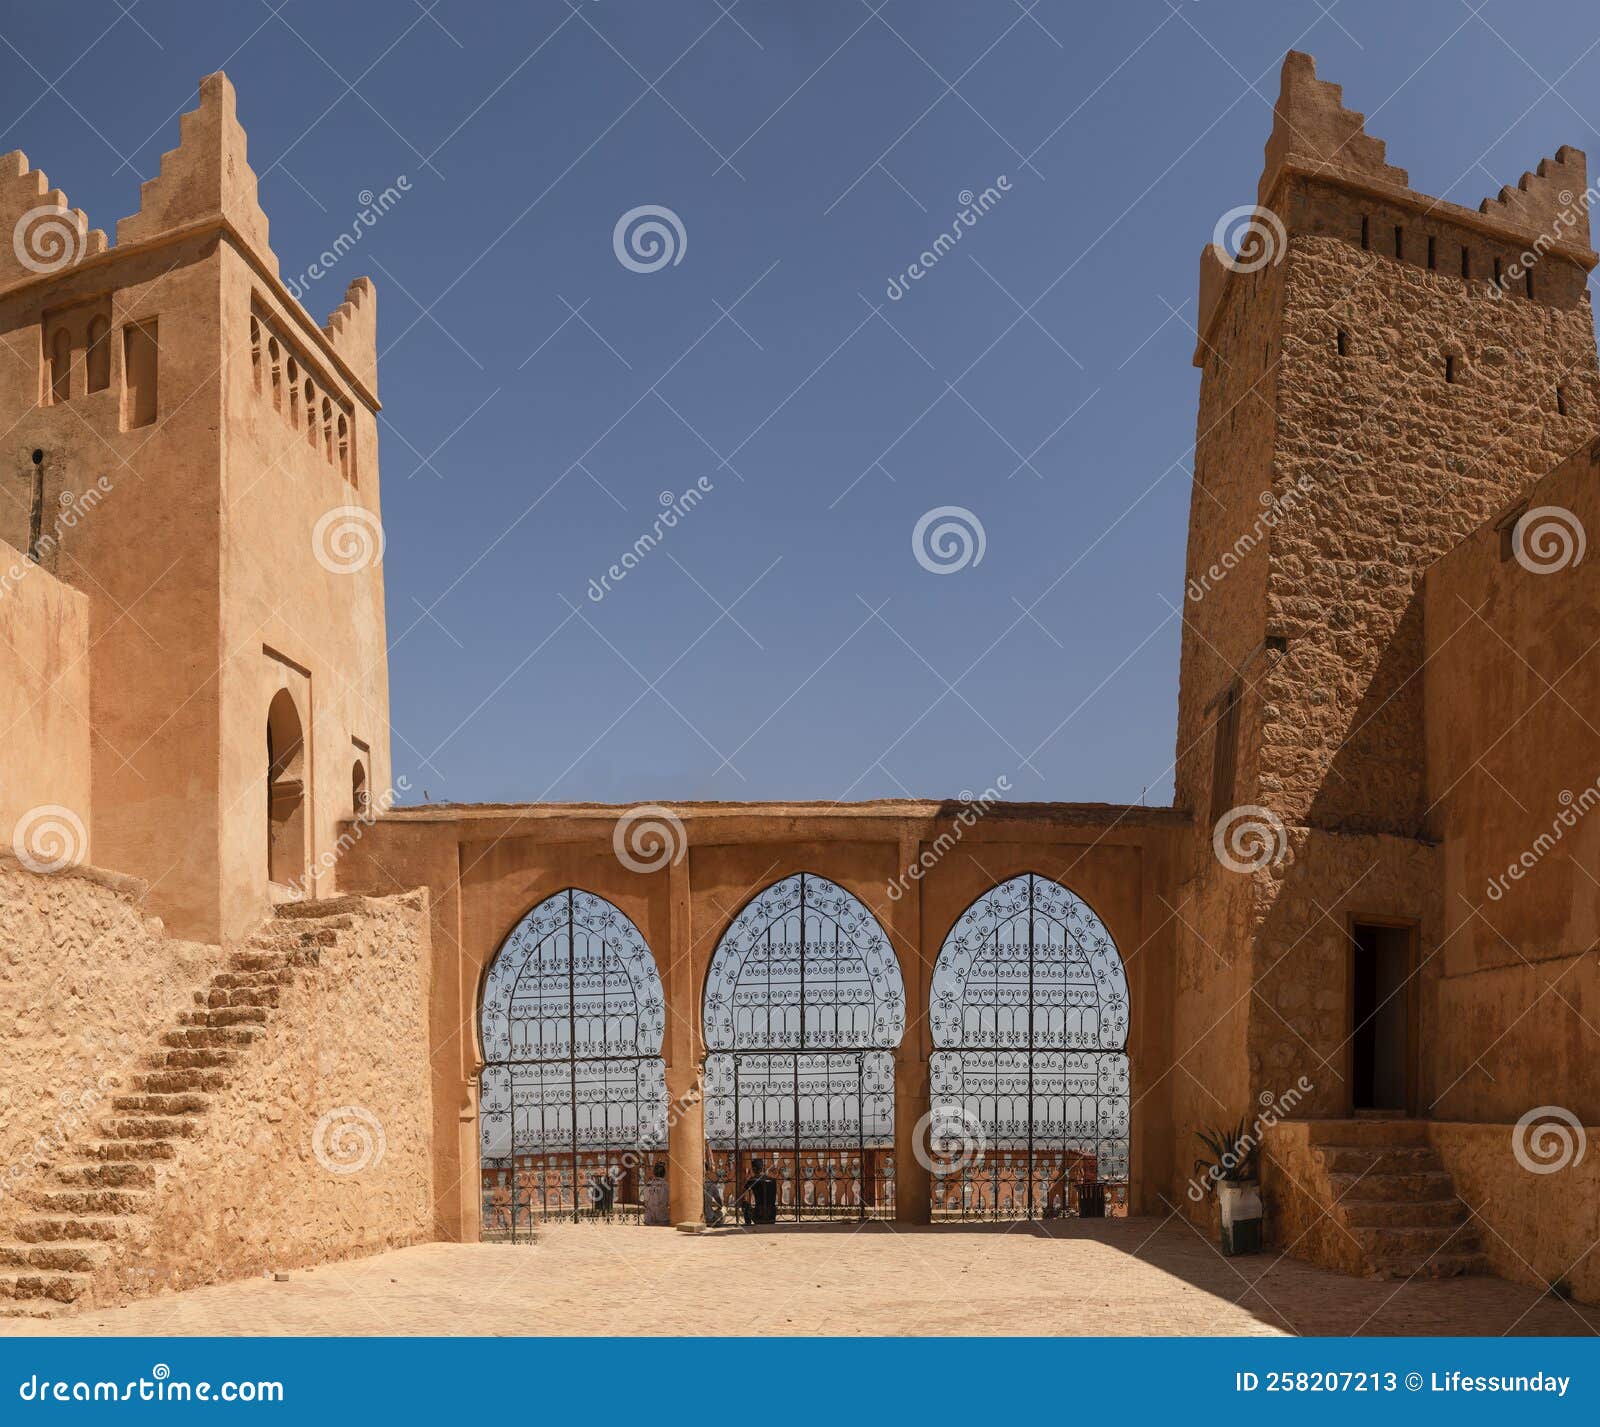 the historic arab kasbah also known as kasbah or borj ras el ain in beni mellal (morocco